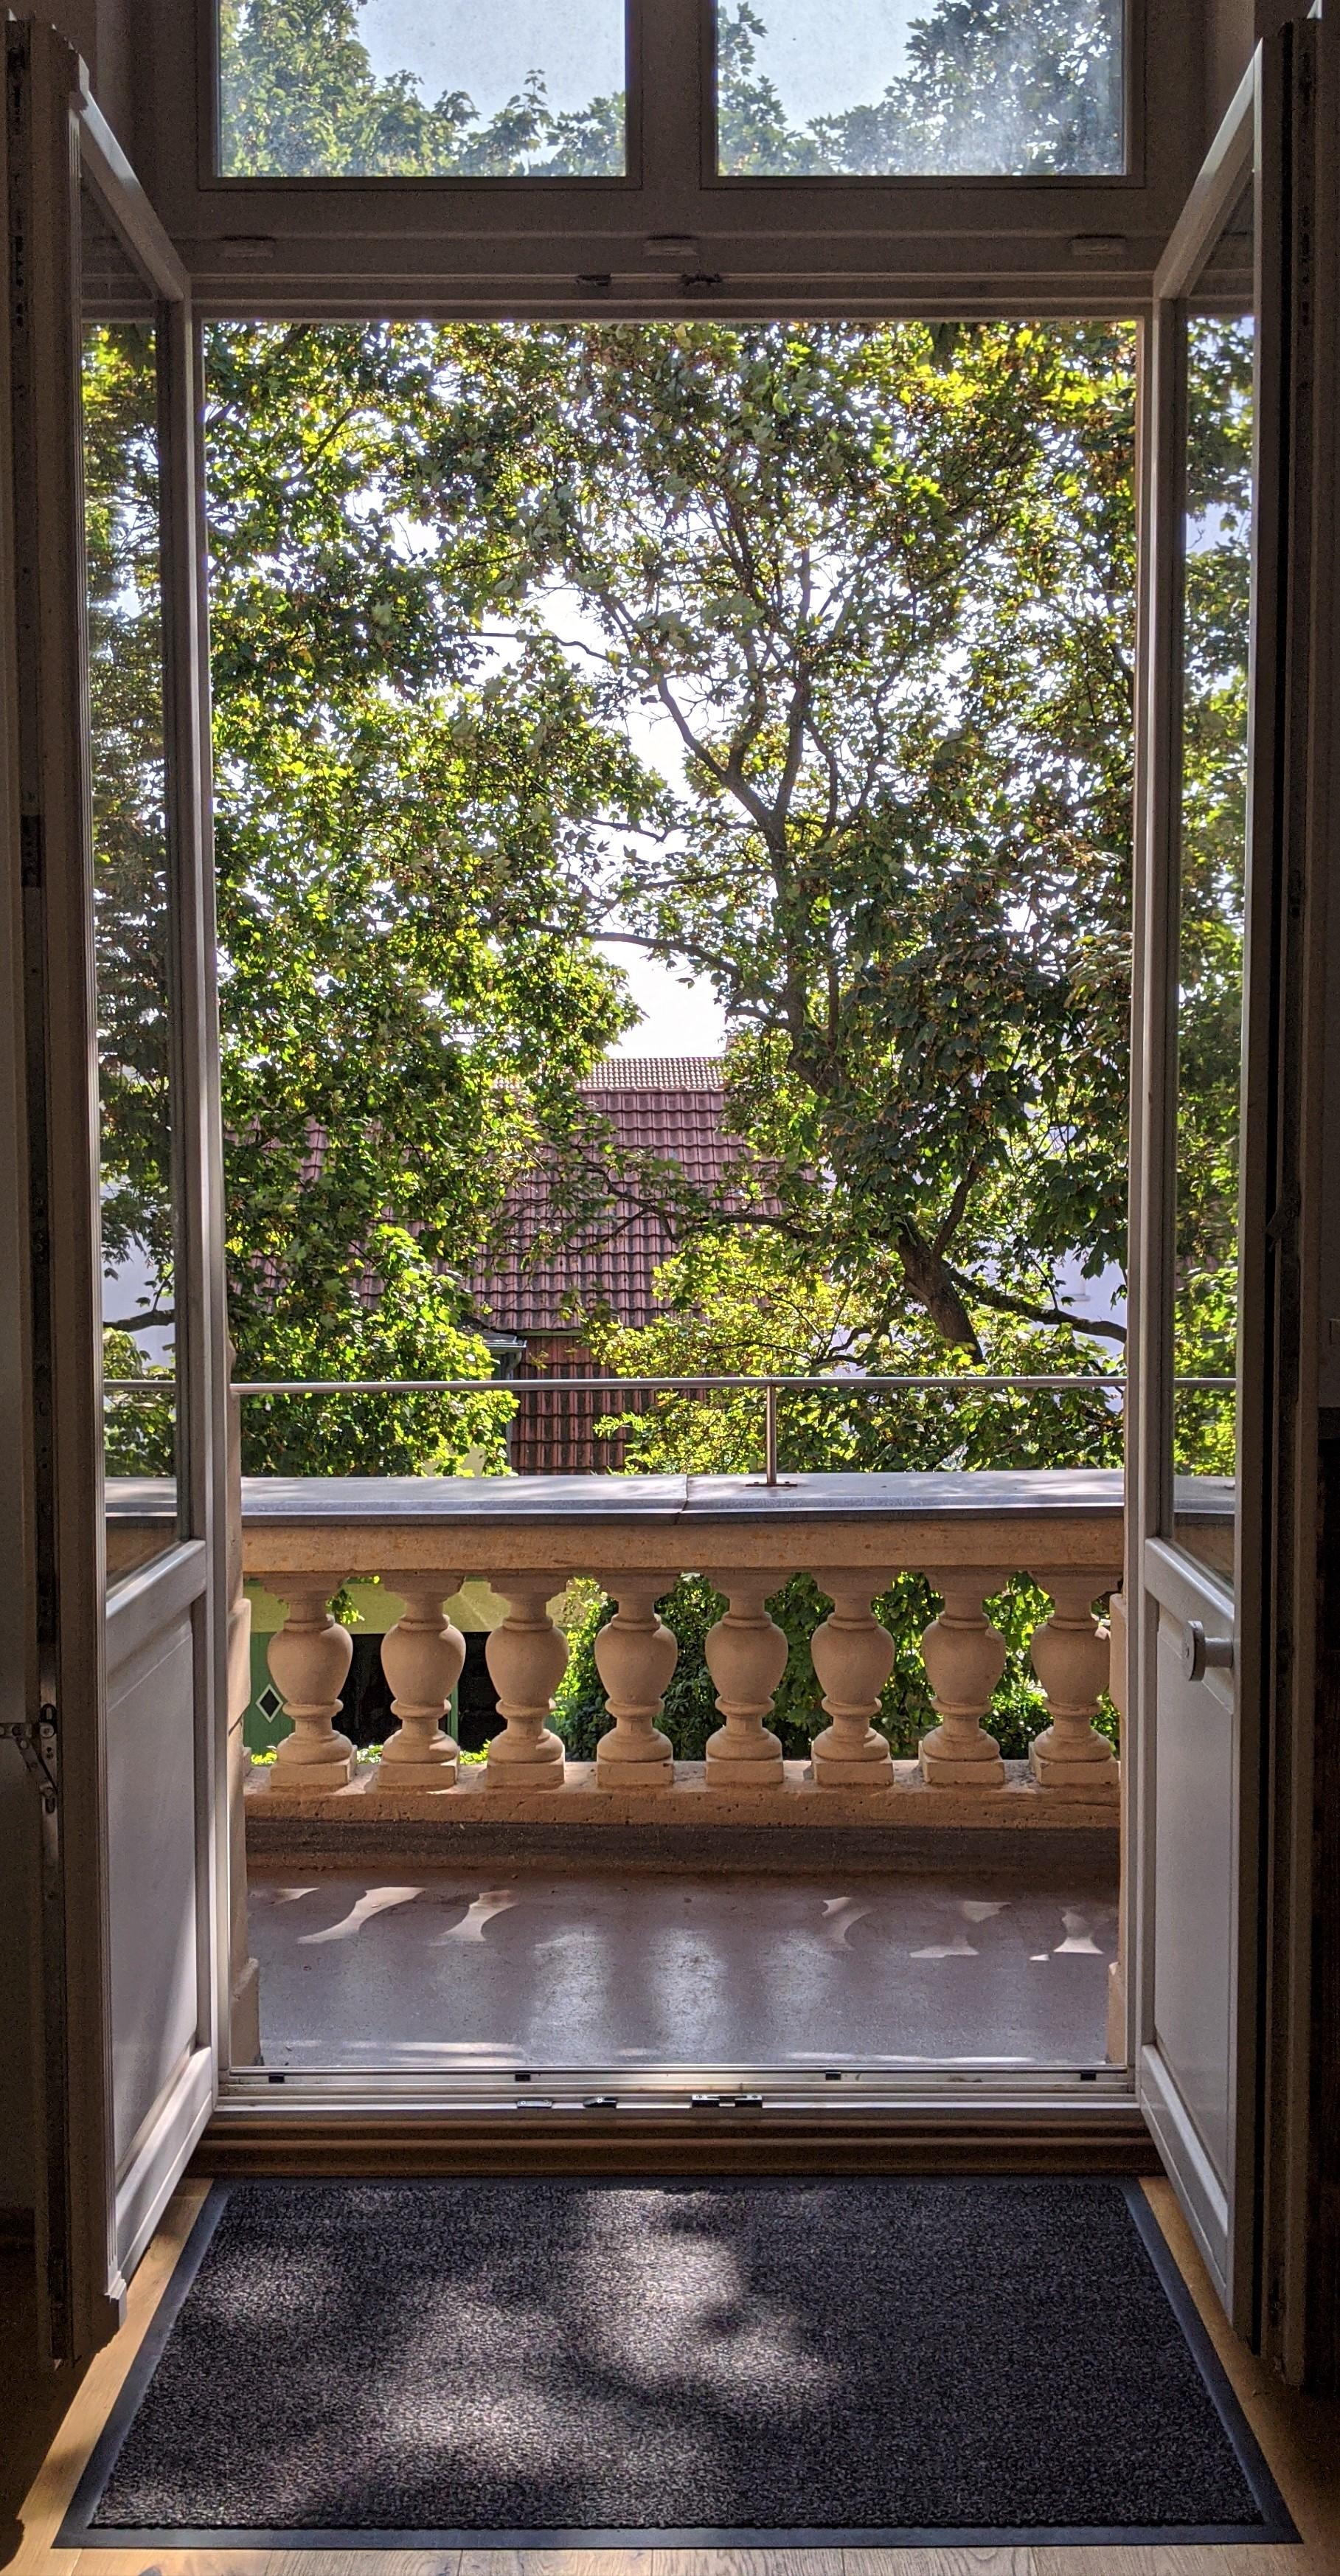 Hallo Ausblick ! #villa#ausblick#balkon#altbau#blickinsgrüne#windowview#gardenview#kleinstadtidyll#stadtoase